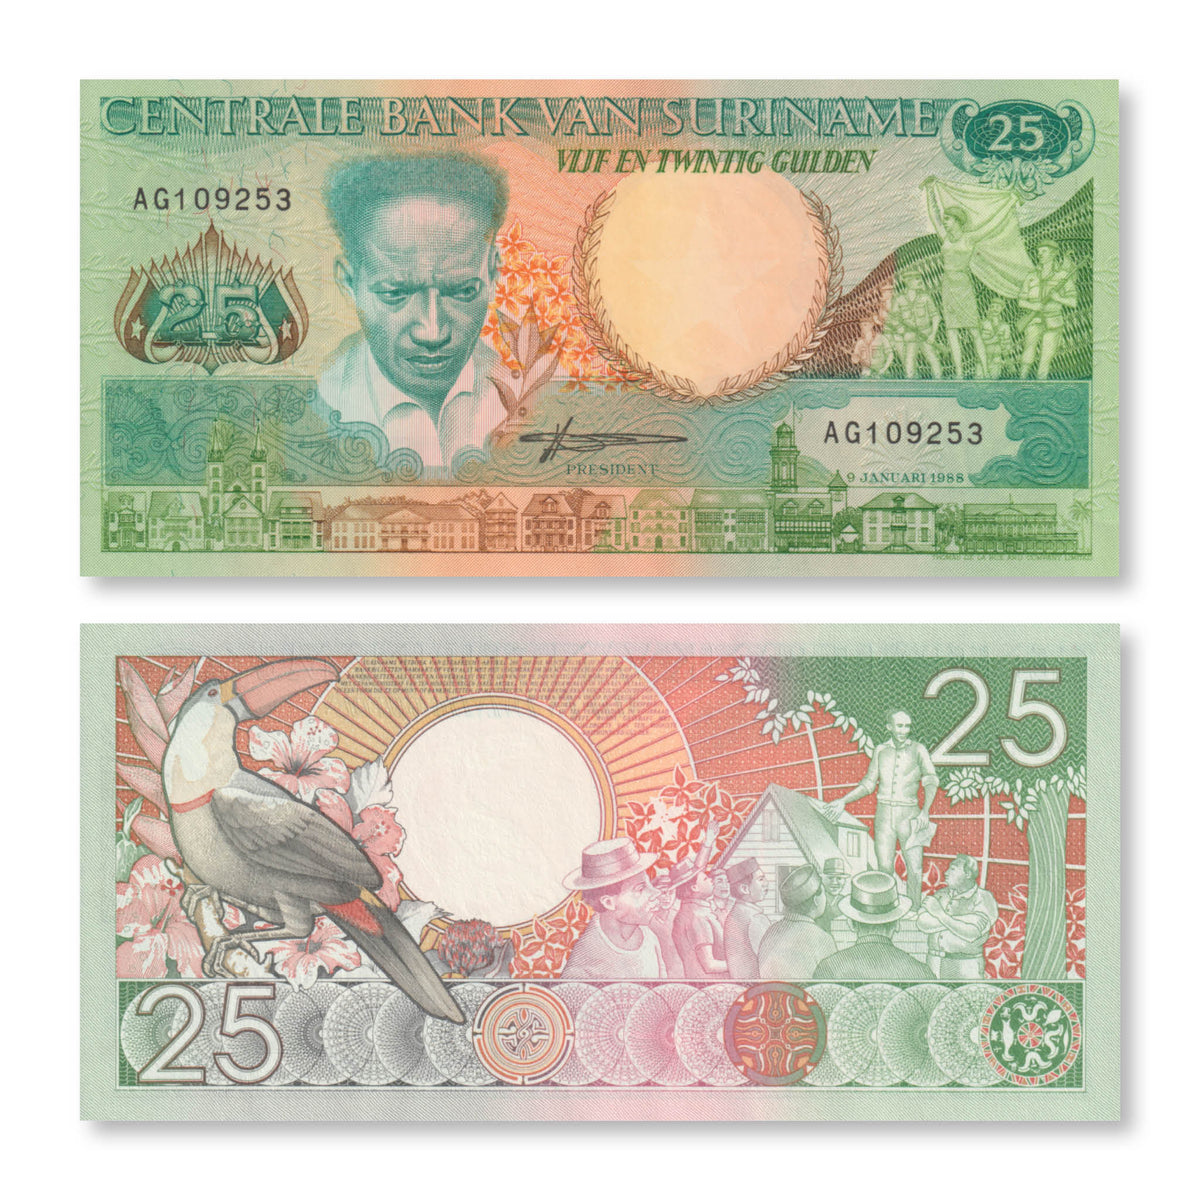 Suriname 25 Gulden, 1988, B518b, P132b, UNC - Robert's World Money - World Banknotes